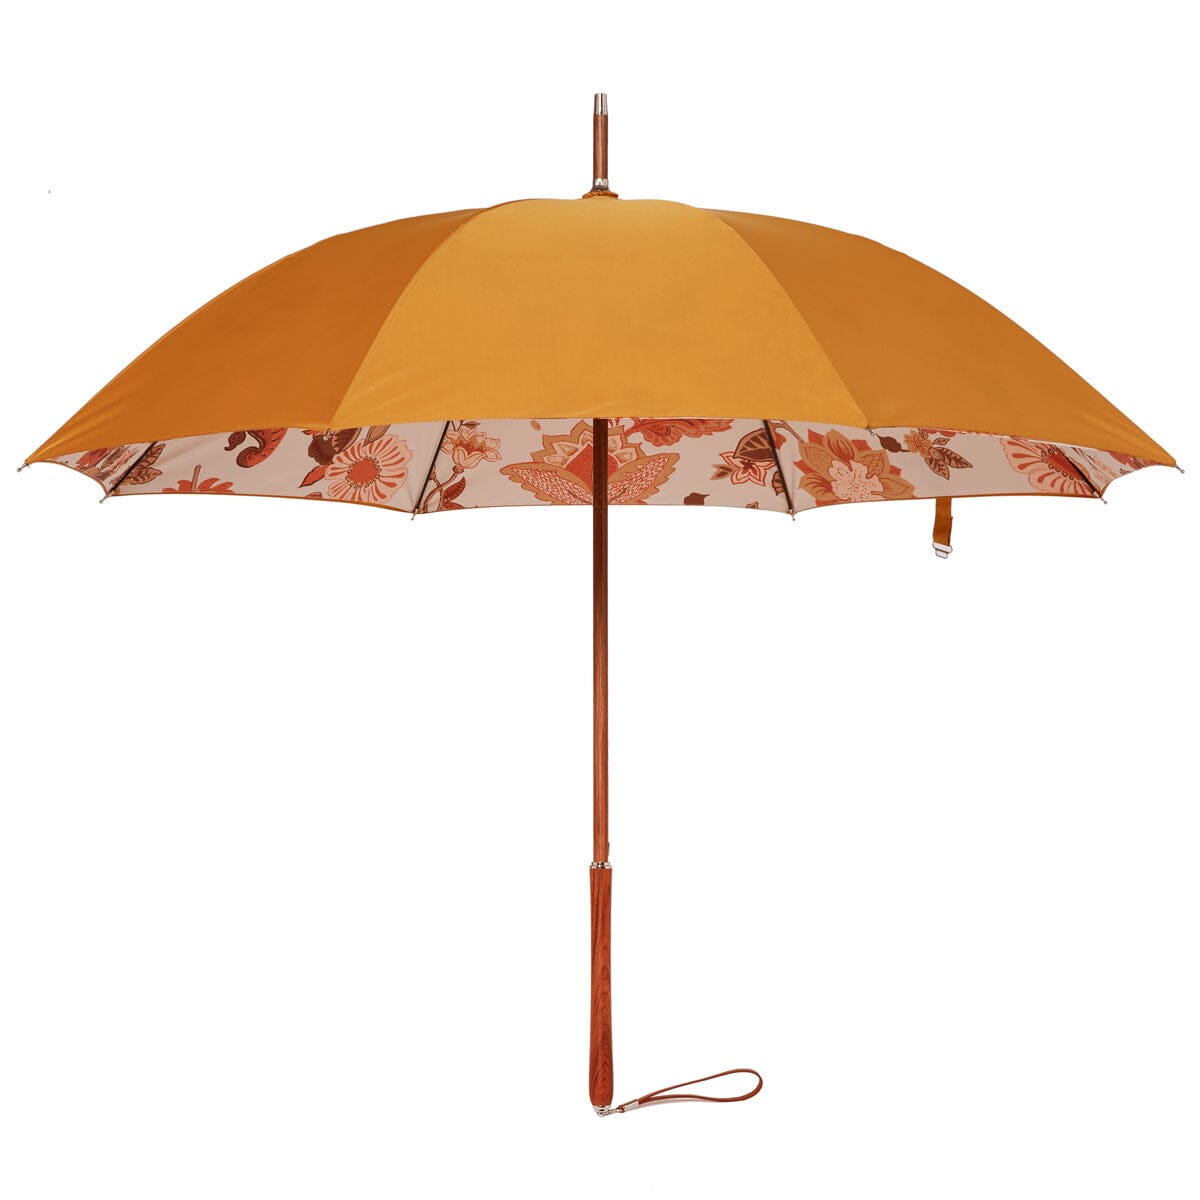 The Rain Umbrella - Paisley Bay